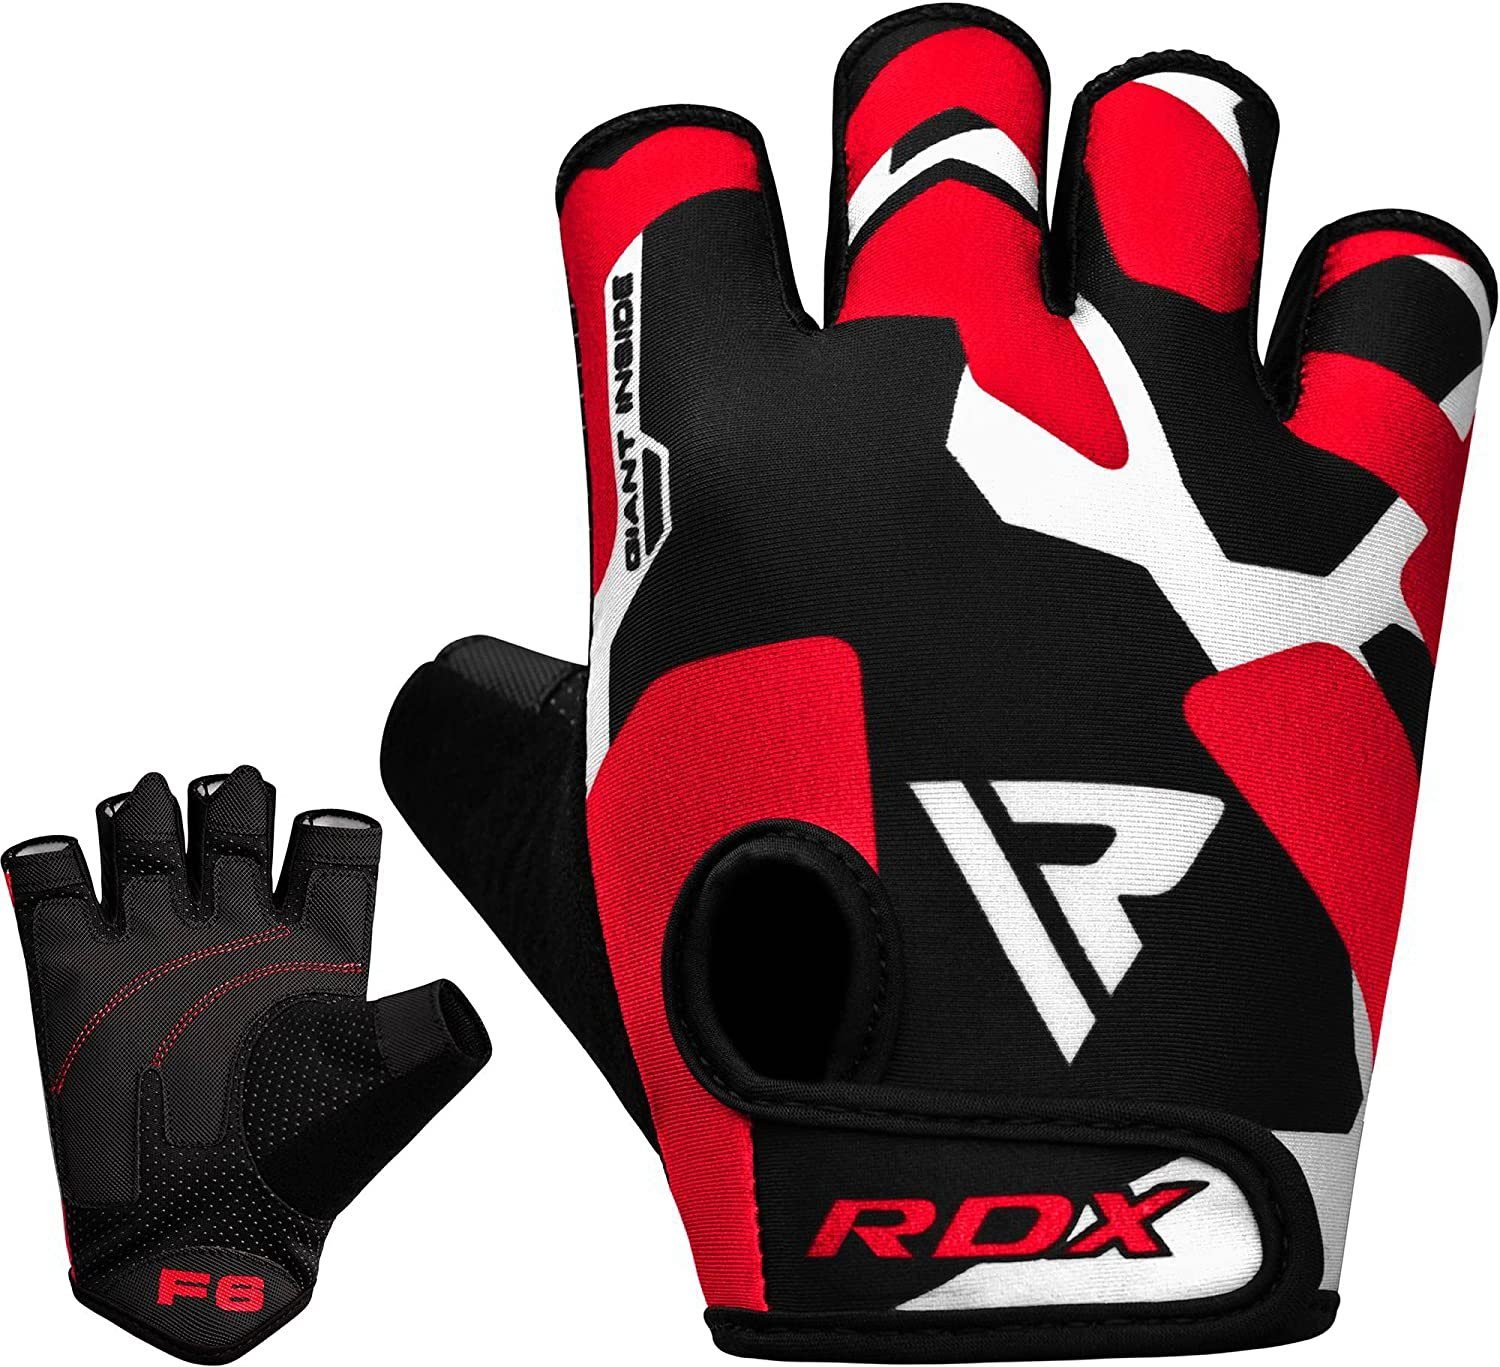 Fitness RDX Trainingshandschuhe Handschuhe, Workout RDX Handgelenkschutz Trainingshandschuhe, RED